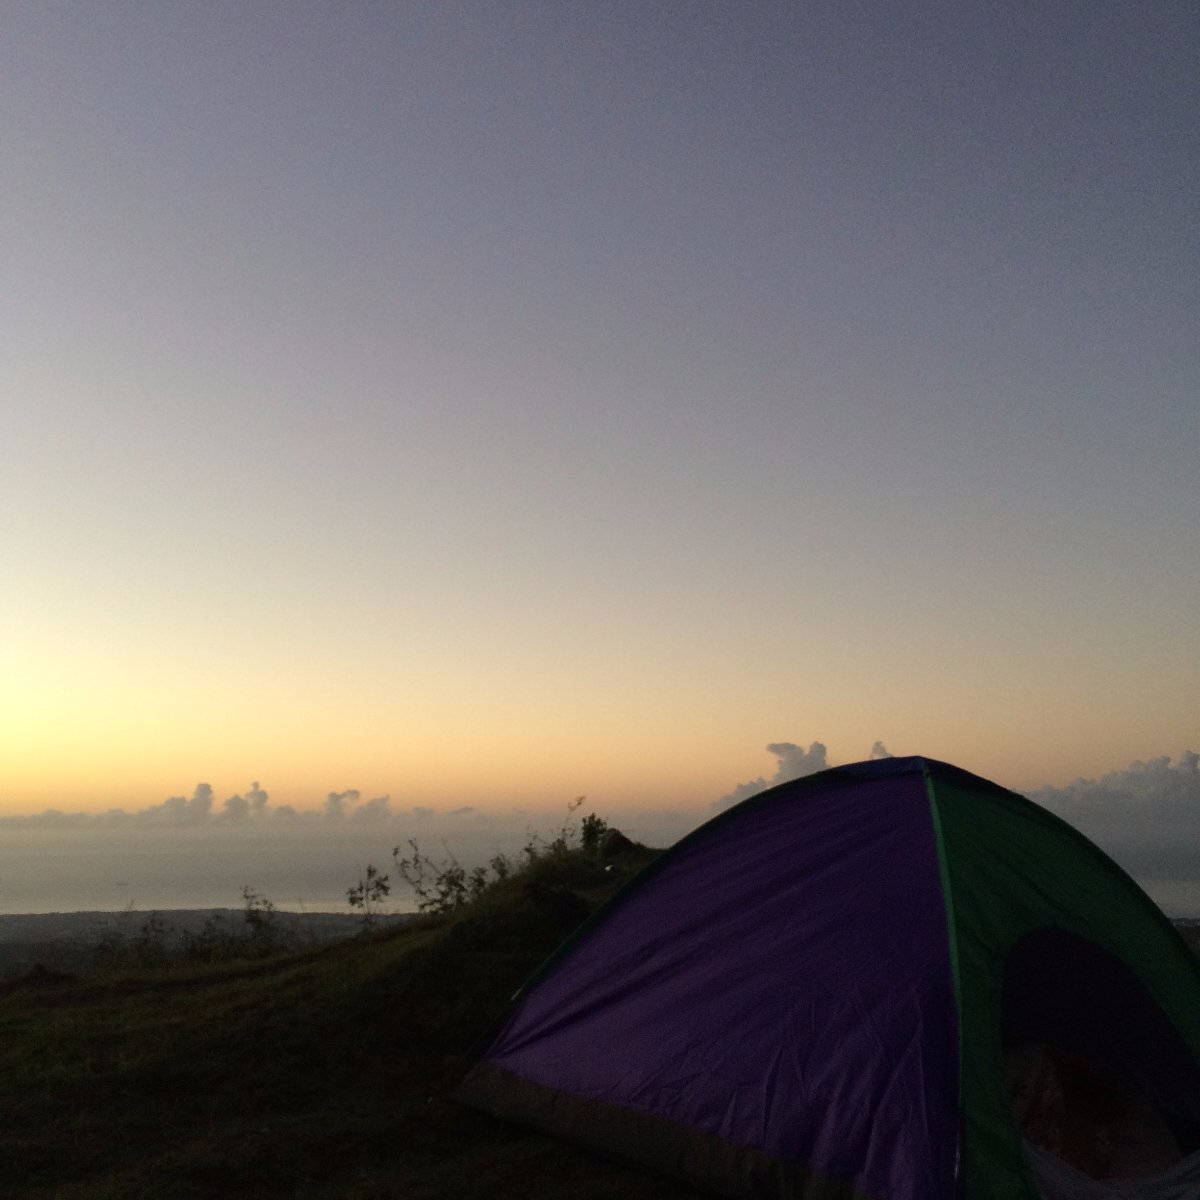 Sunrise, Mountains, Tent, Travel, Explore